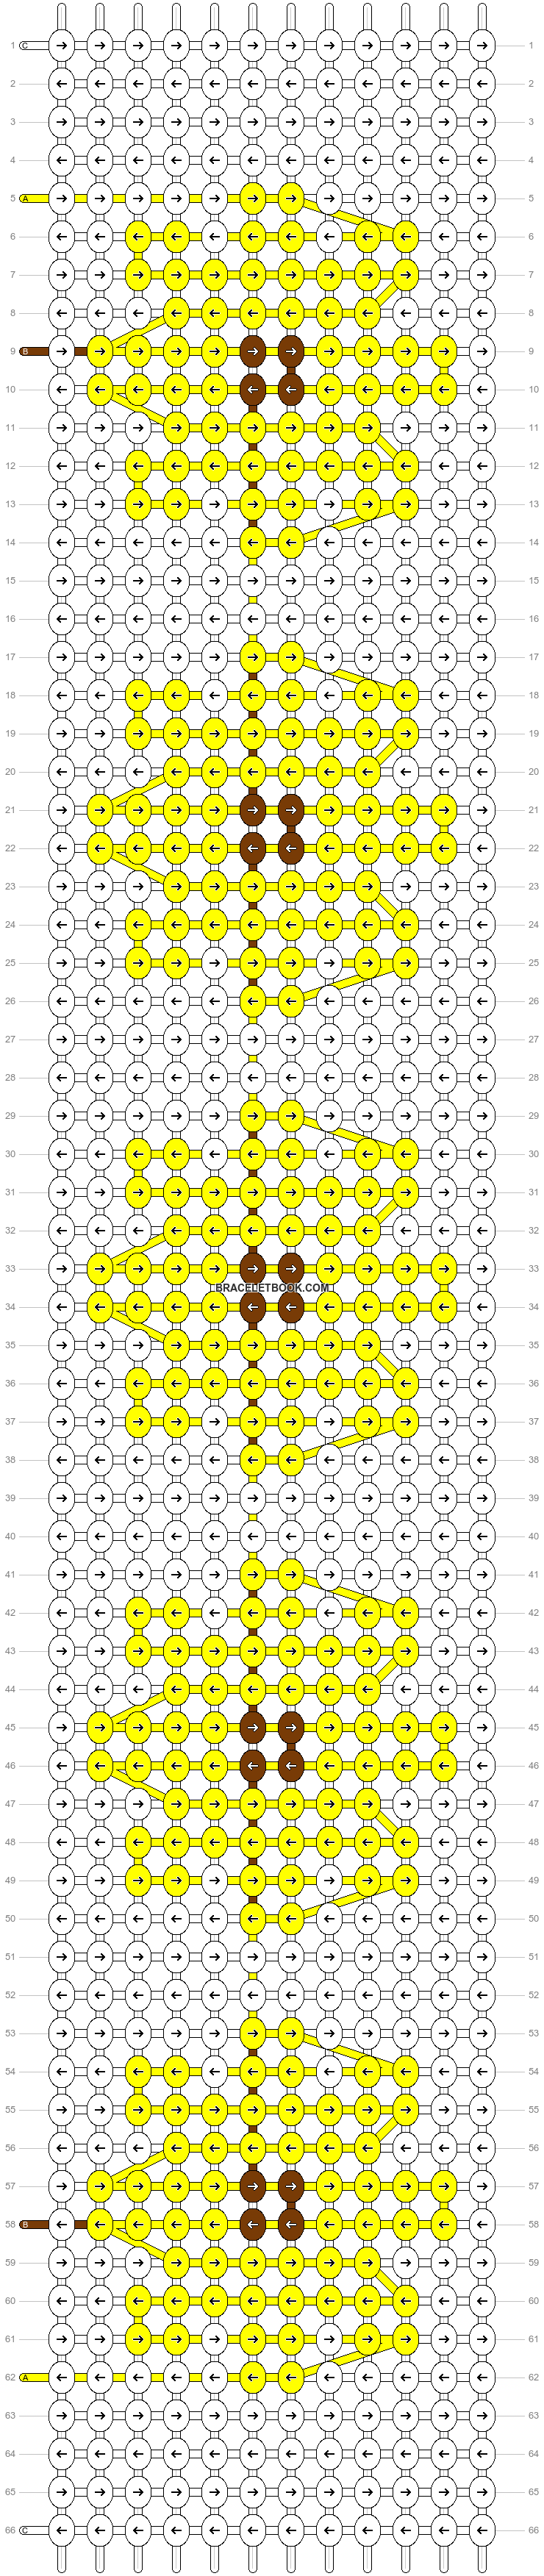 Alpha pattern #46125 variation #70181 pattern